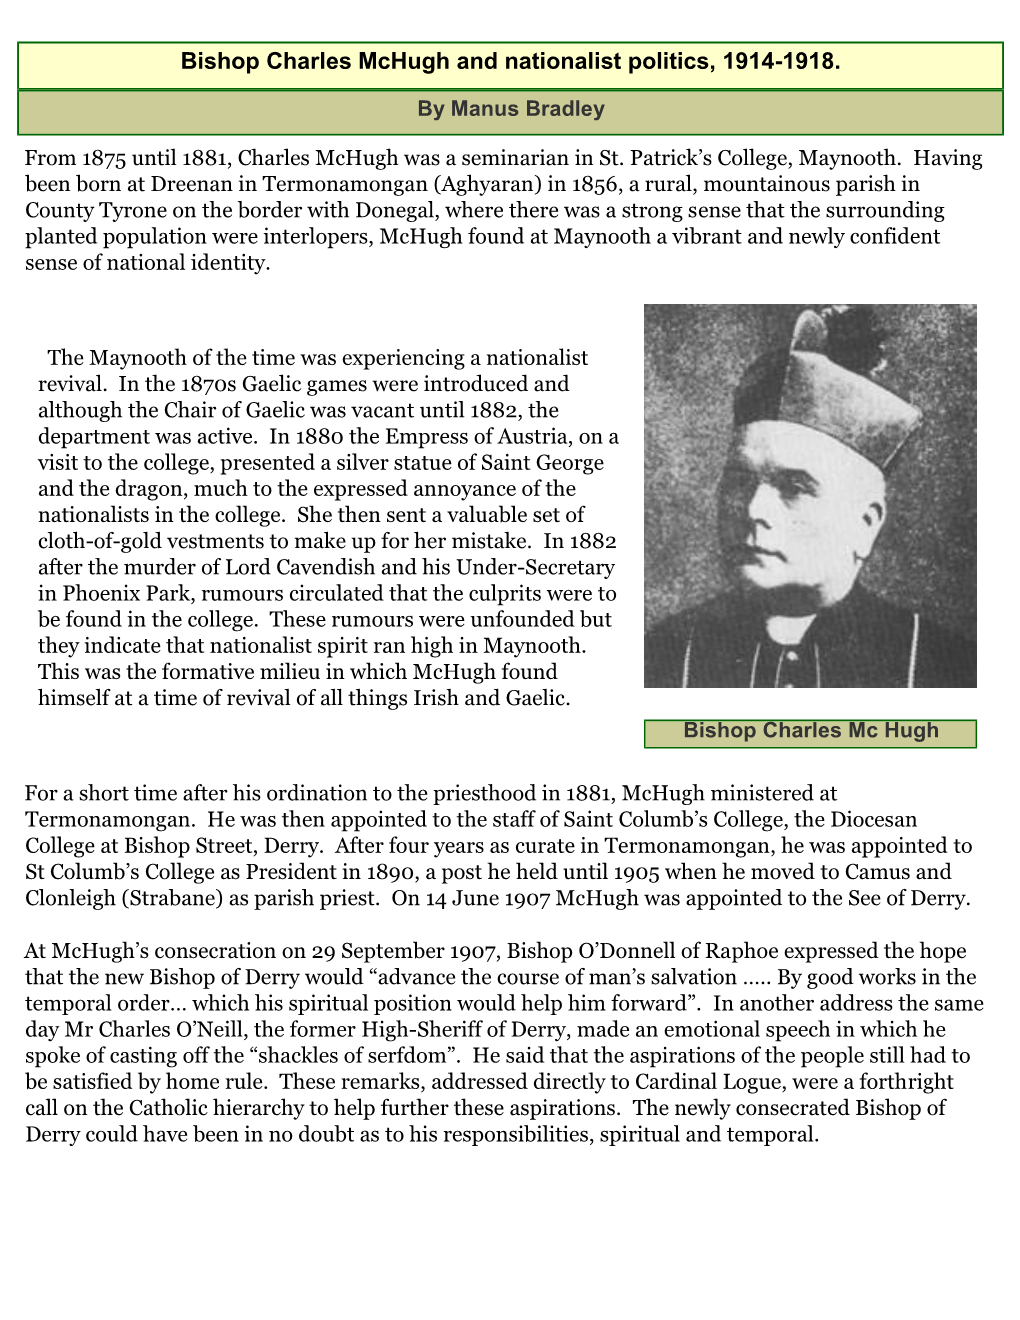 Bishop Charles Mchugh and Nationalist Politics, 1914-1918